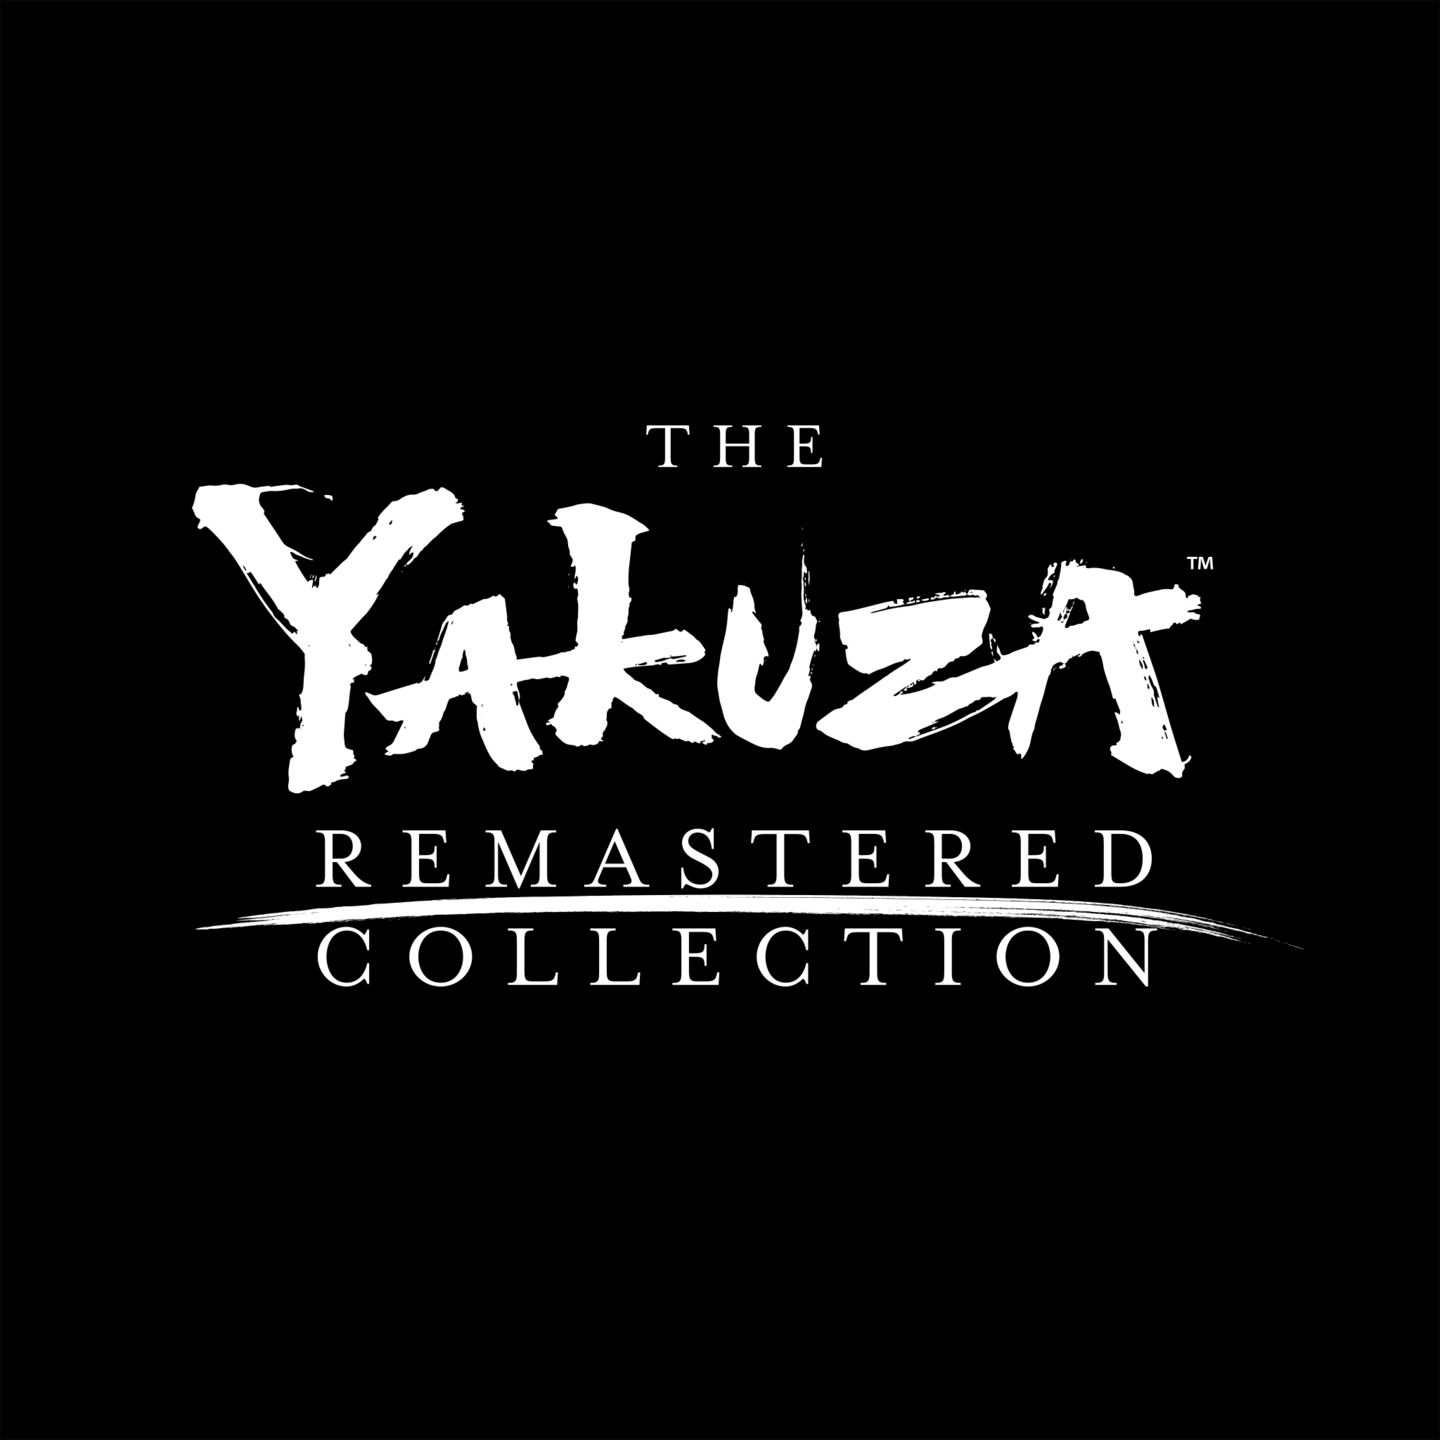 Yakuza collection. The Yakuza Remastered collection. Yakuza логотип. Наклейка якудза. Yakuza's logo.